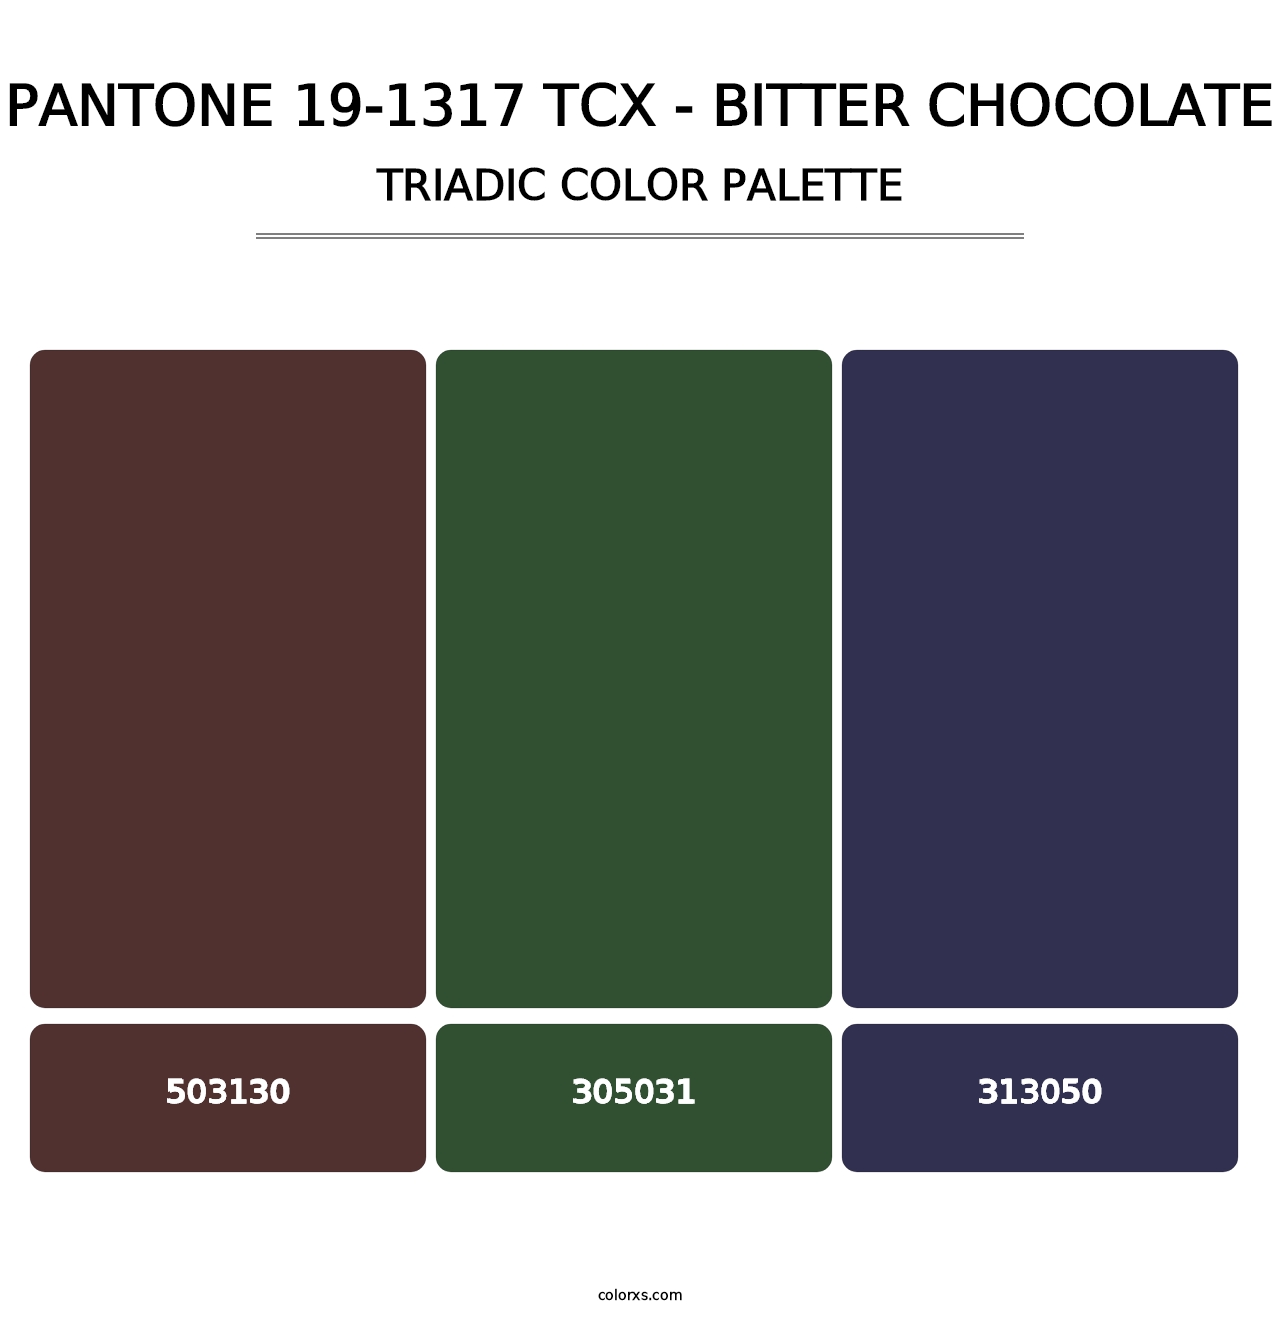 PANTONE 19-1317 TCX - Bitter Chocolate - Triadic Color Palette